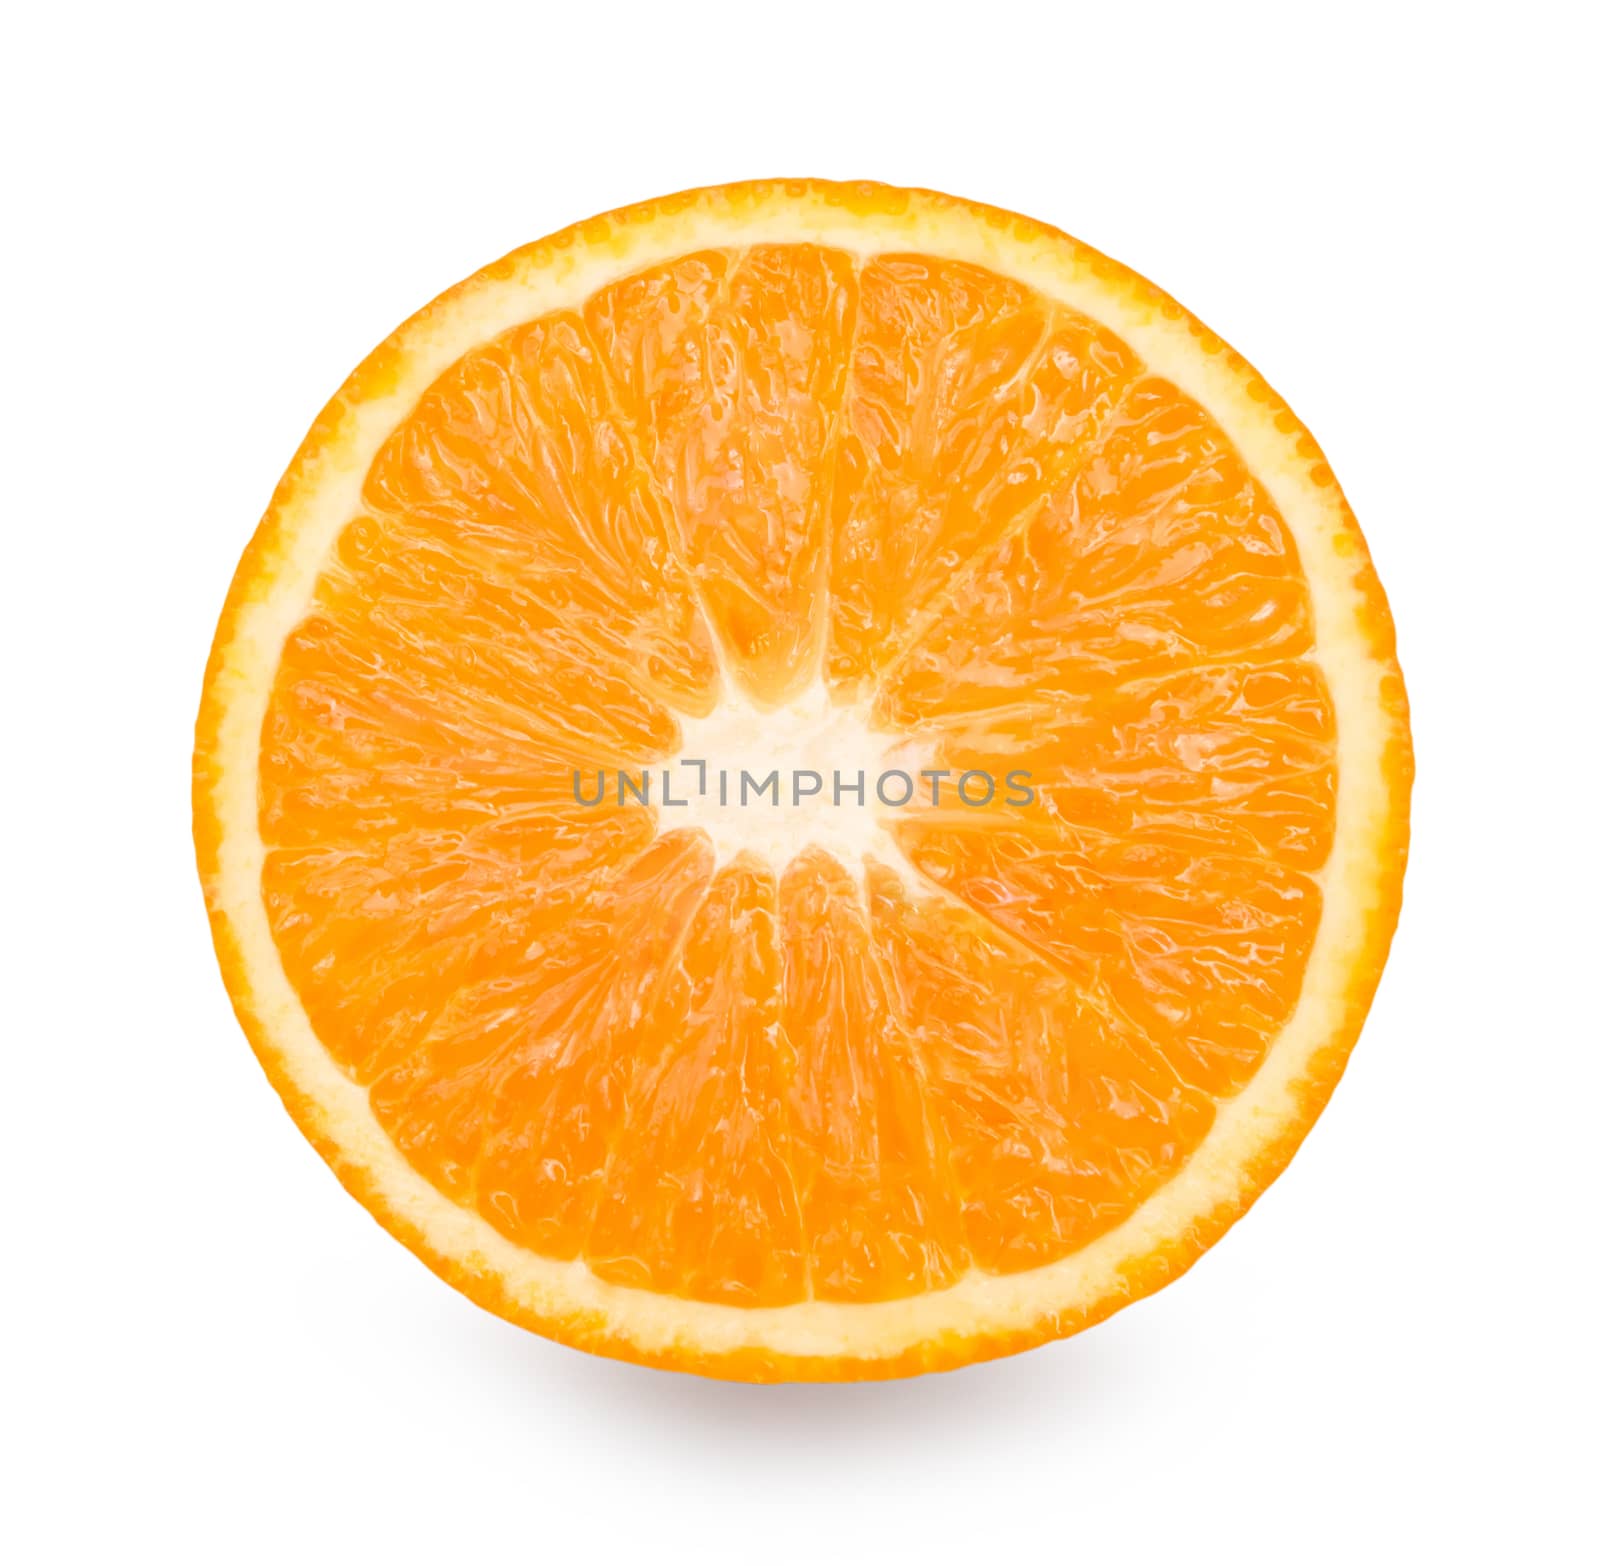 Fresh orange fruit slice on white background with clipping path by pt.pongsak@gmail.com